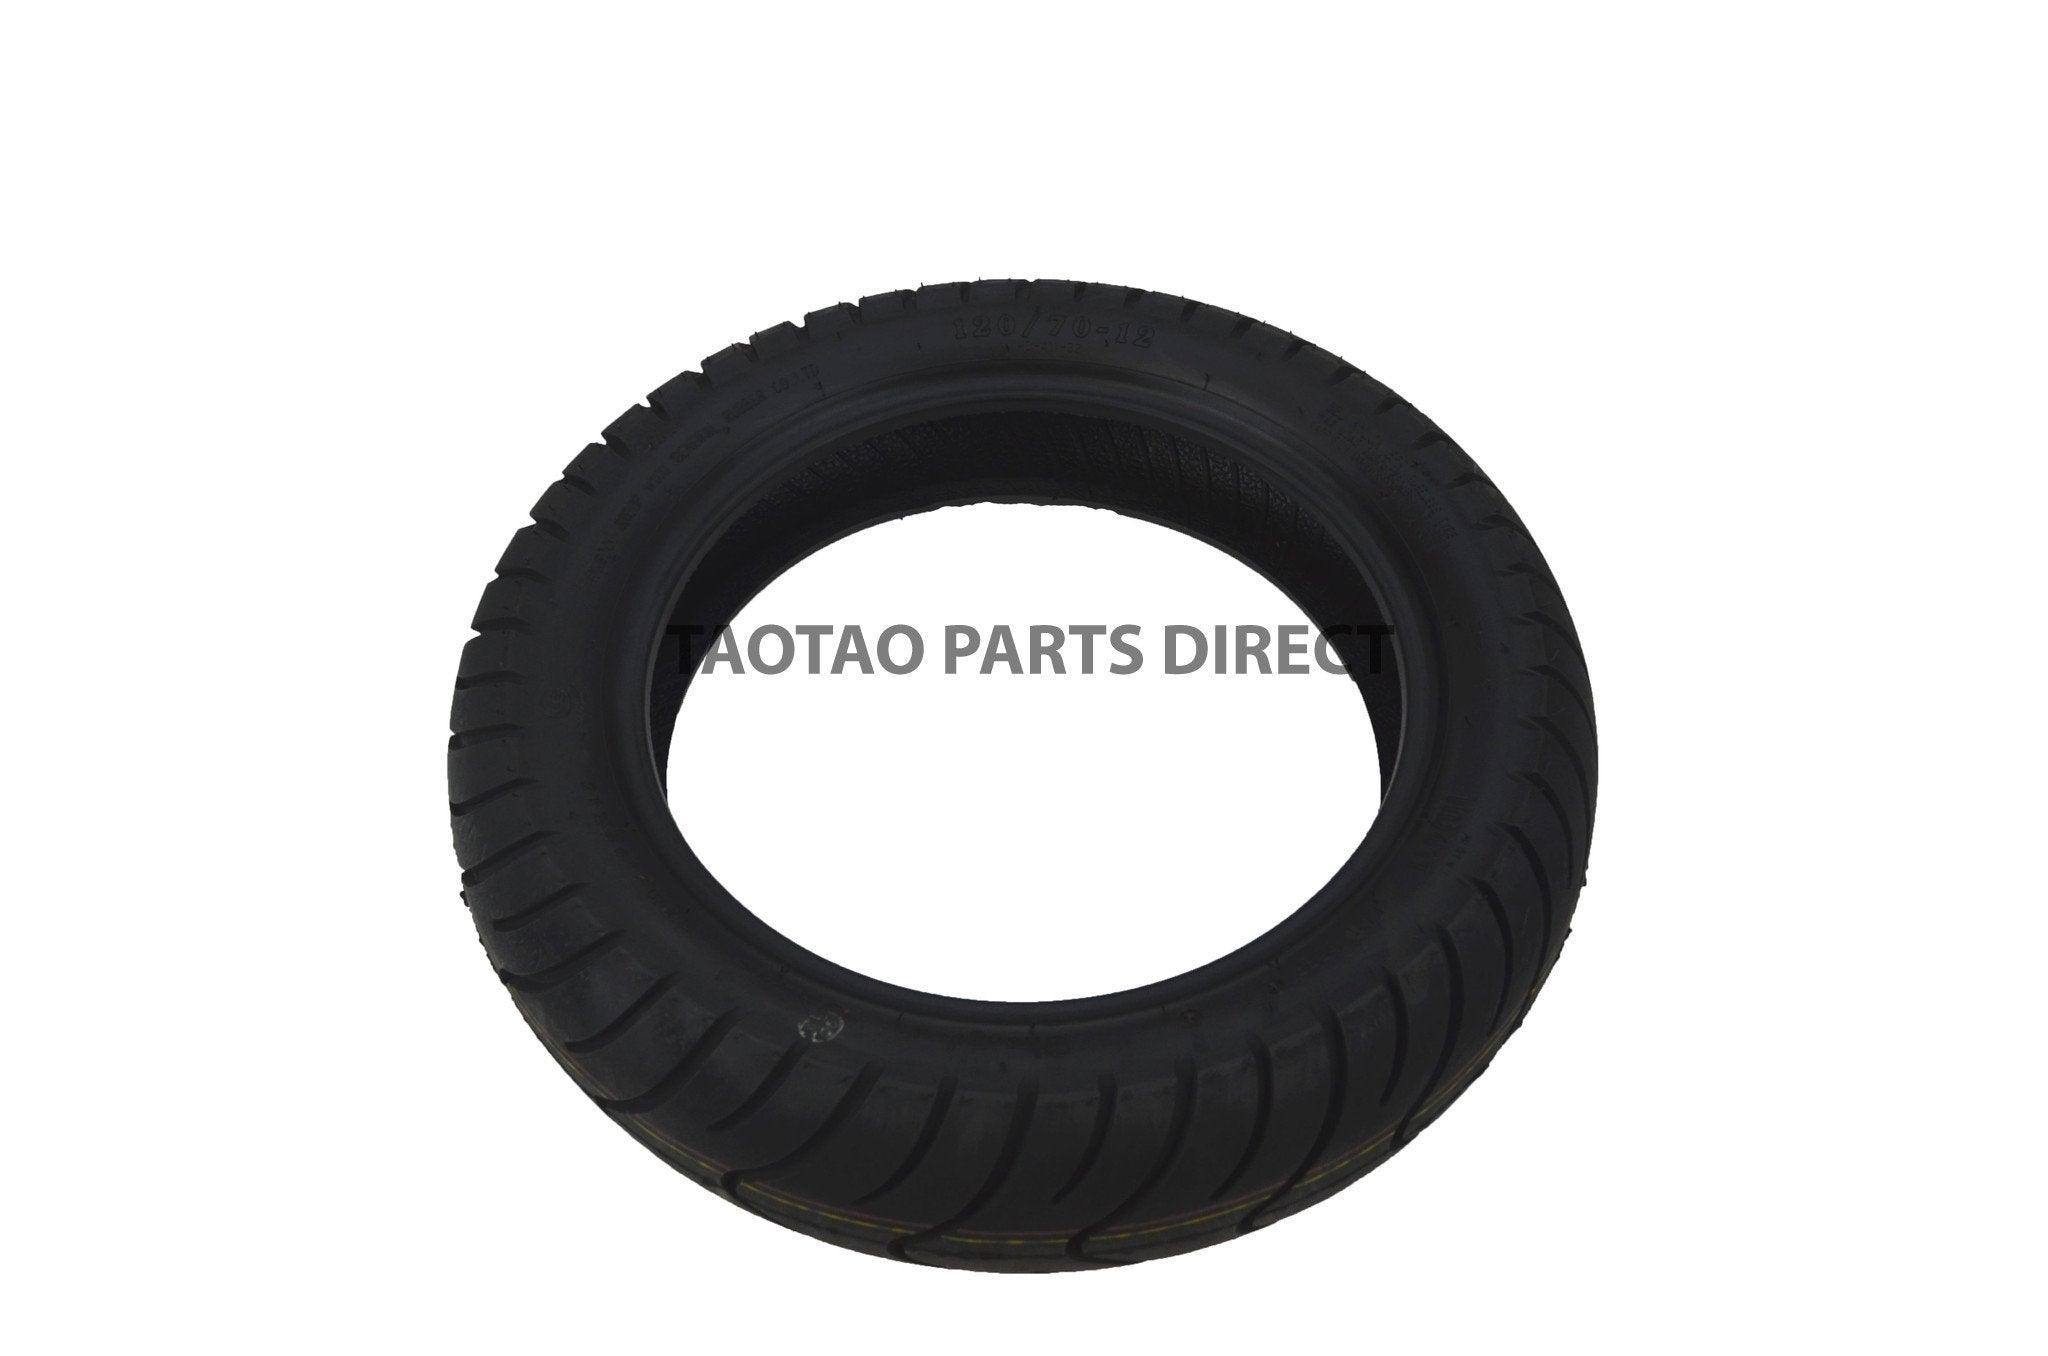 120x70-12 Tire - TaoTaoPartsDirect.com